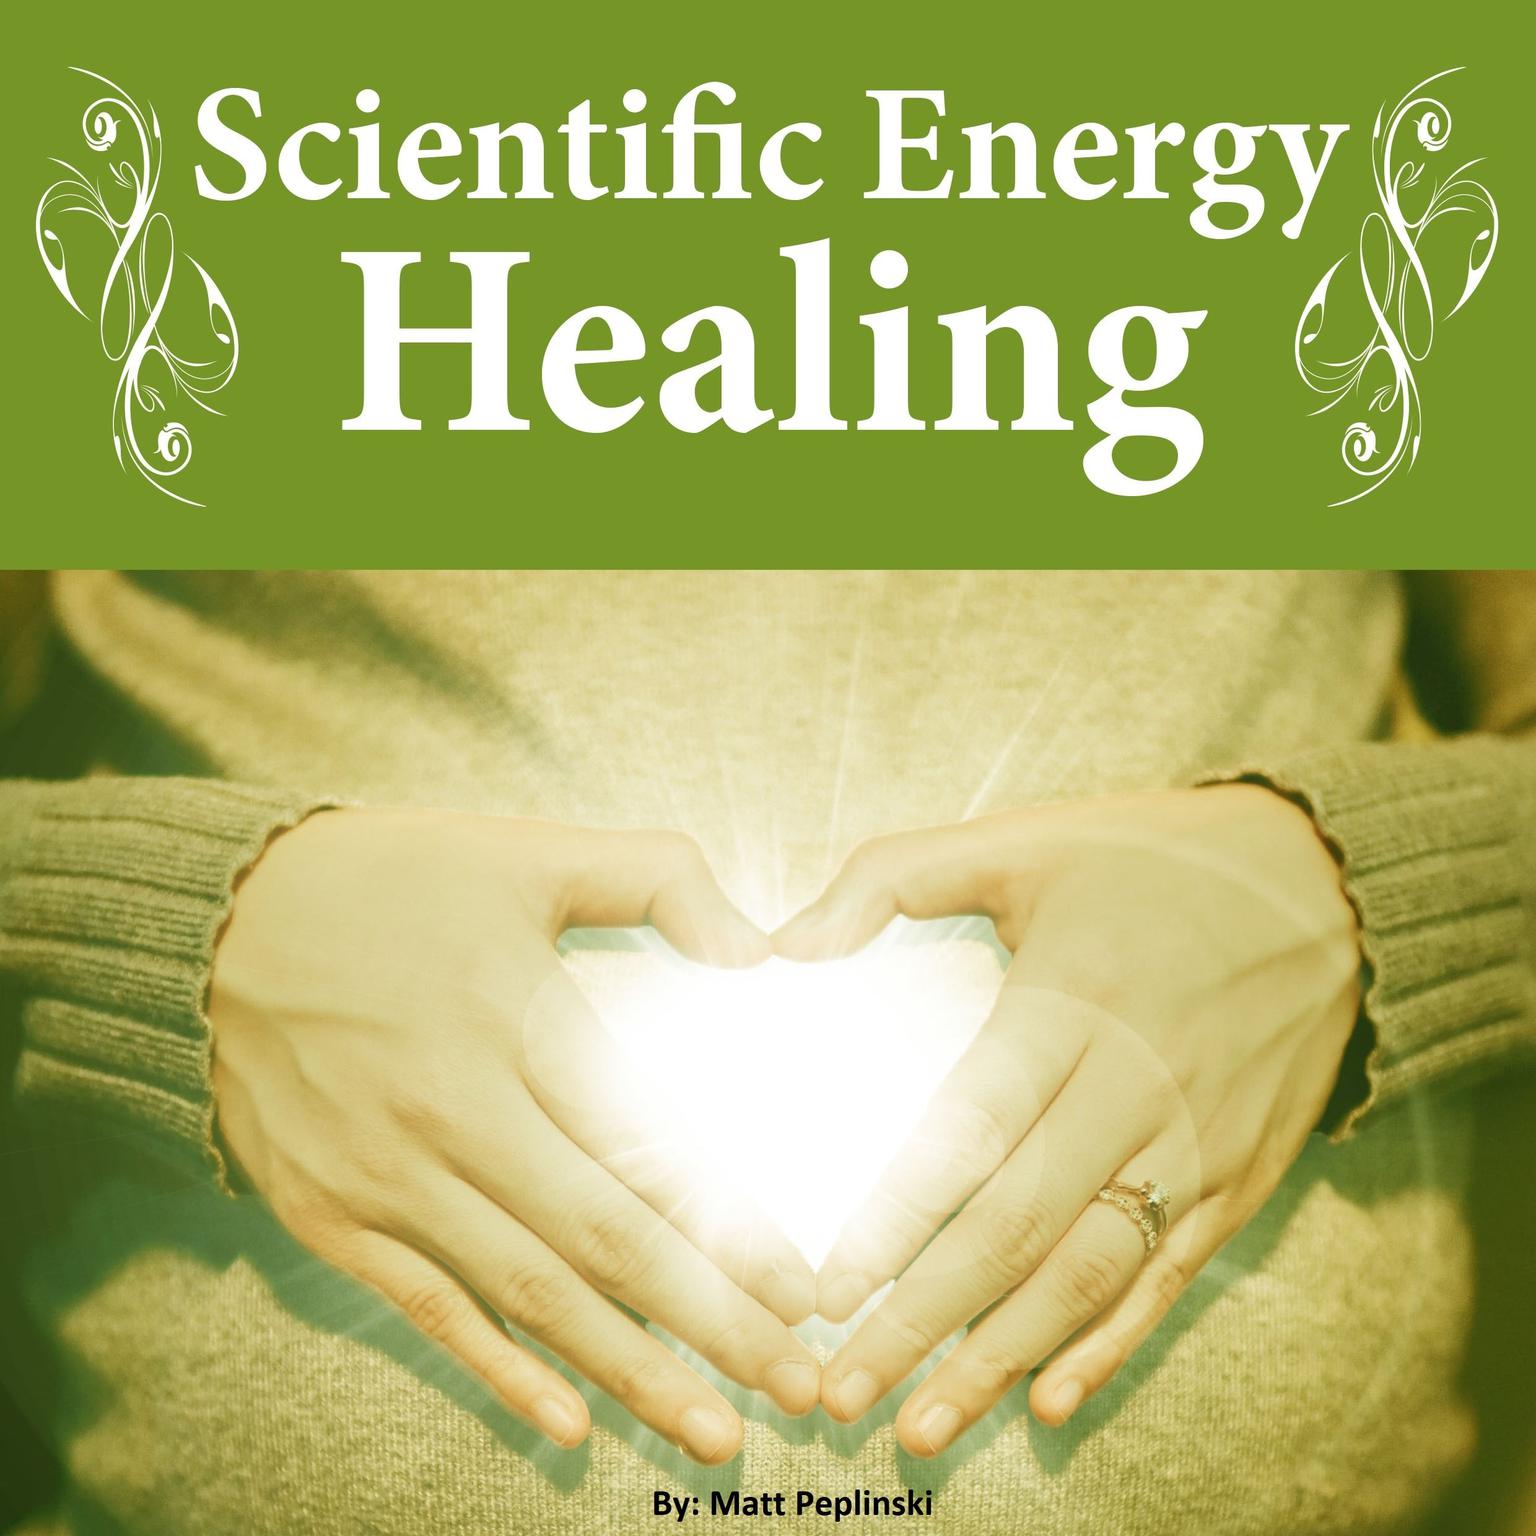 Scientific Energy Healing (Abridged): The Ultimate Reiki Course Audiobook, by Matt Peplinski